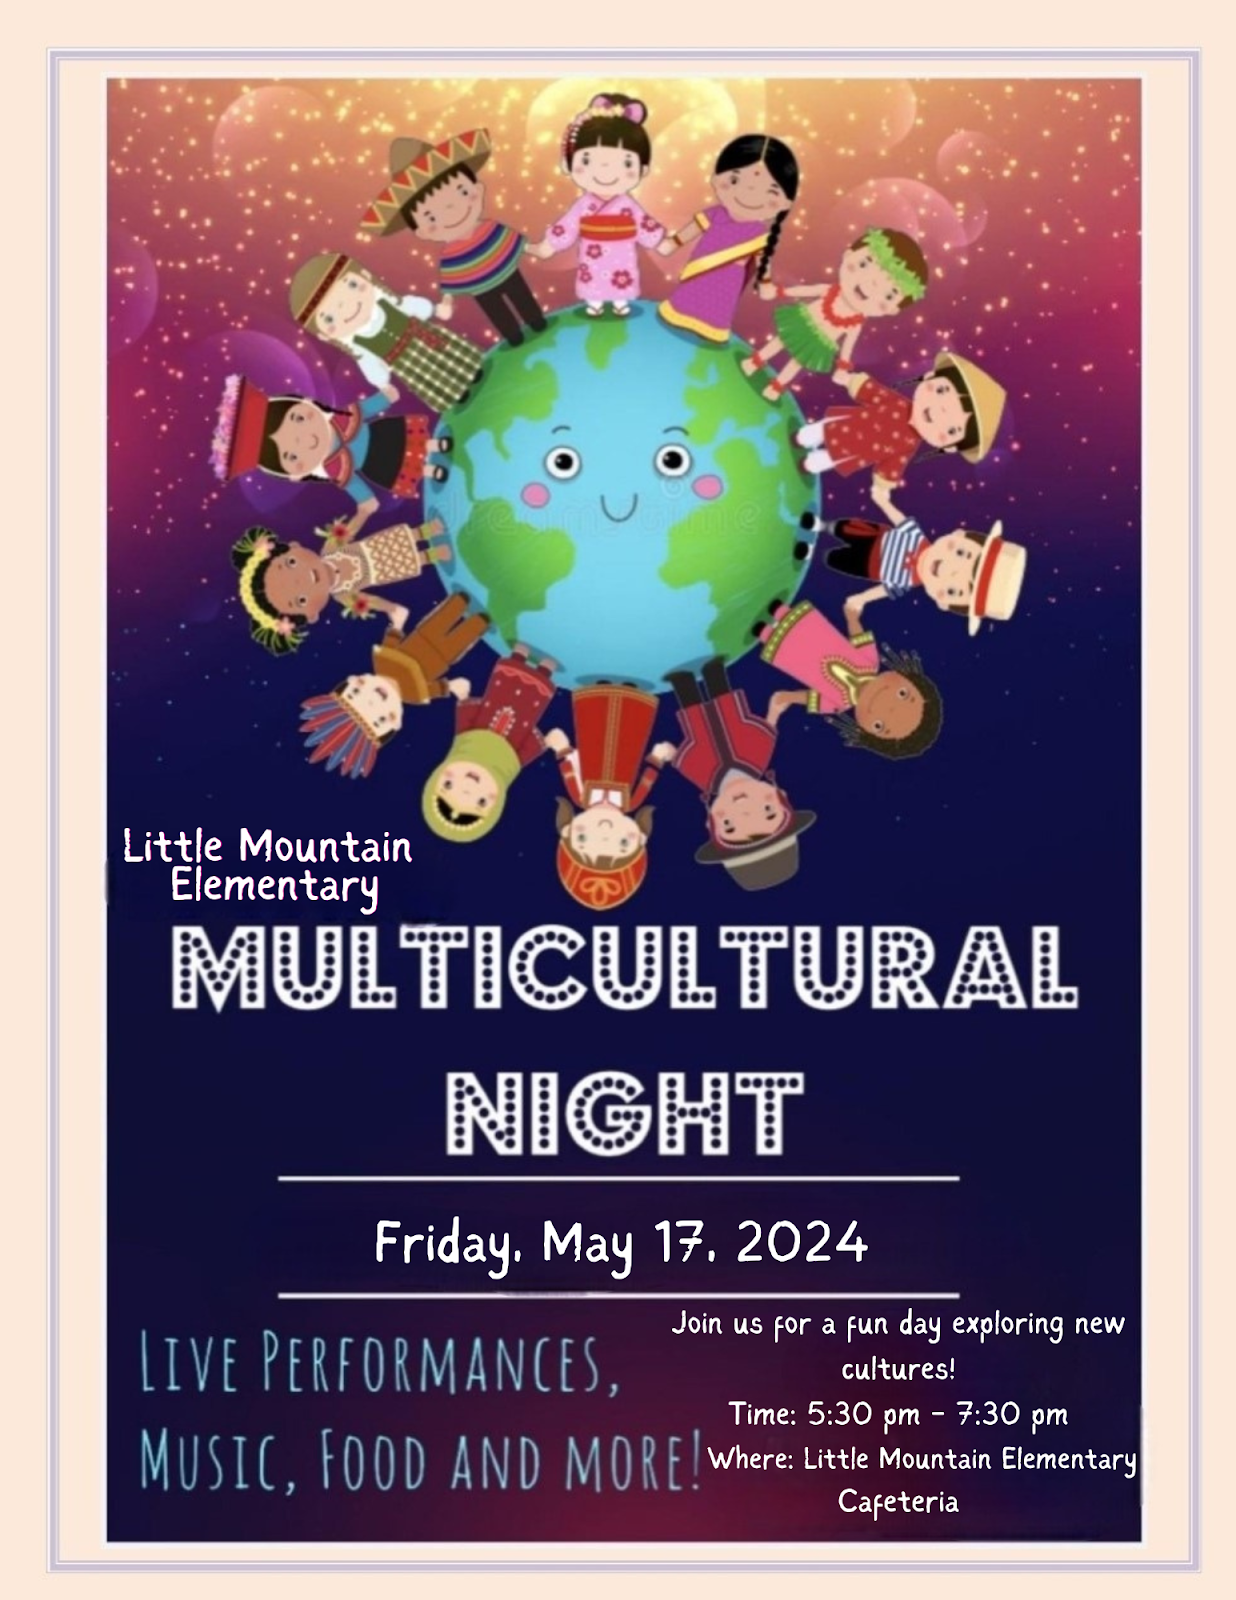 Multicultural event information